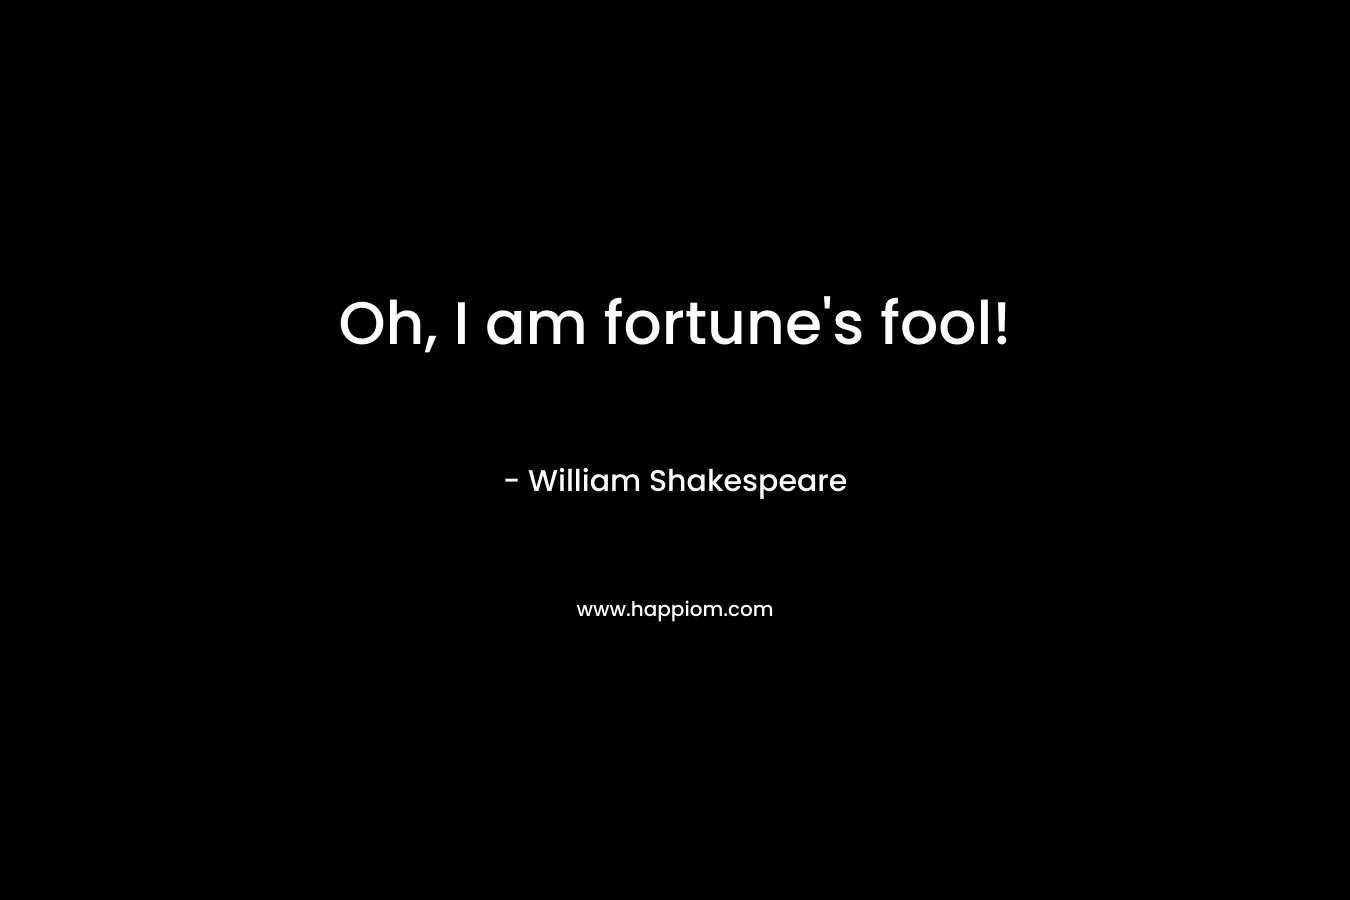 Oh, I am fortune’s fool! – William Shakespeare